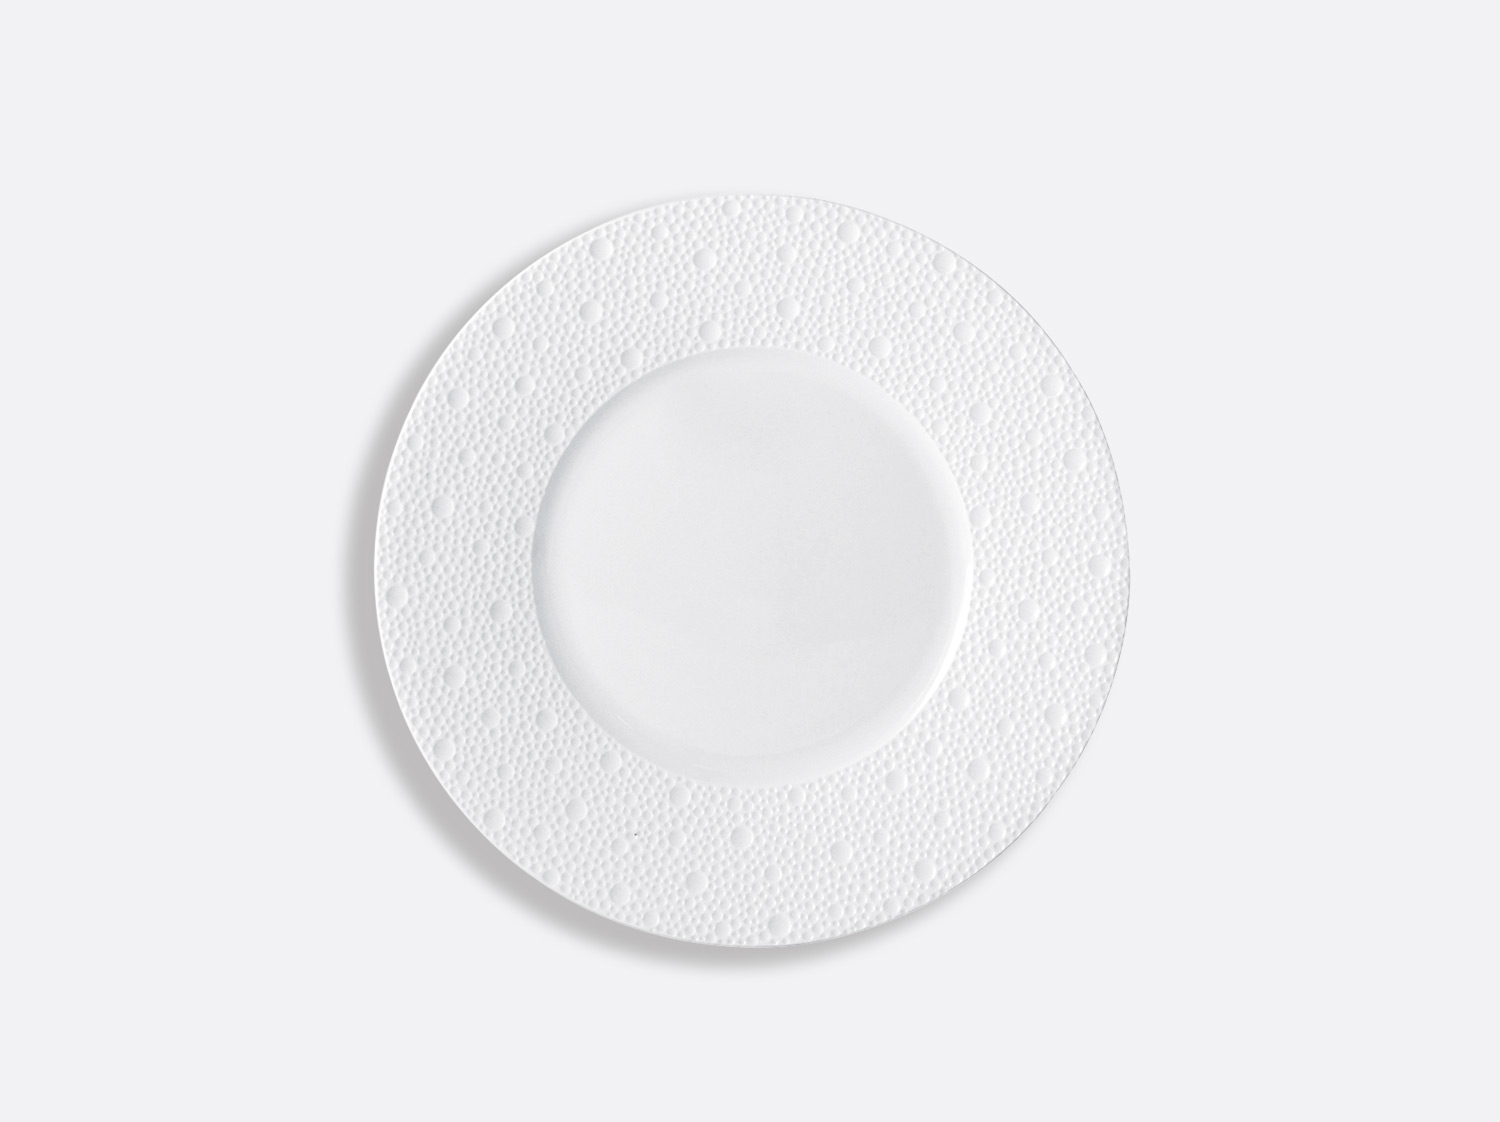 China Plate 21 cm of the collection Ecume | Bernardaud